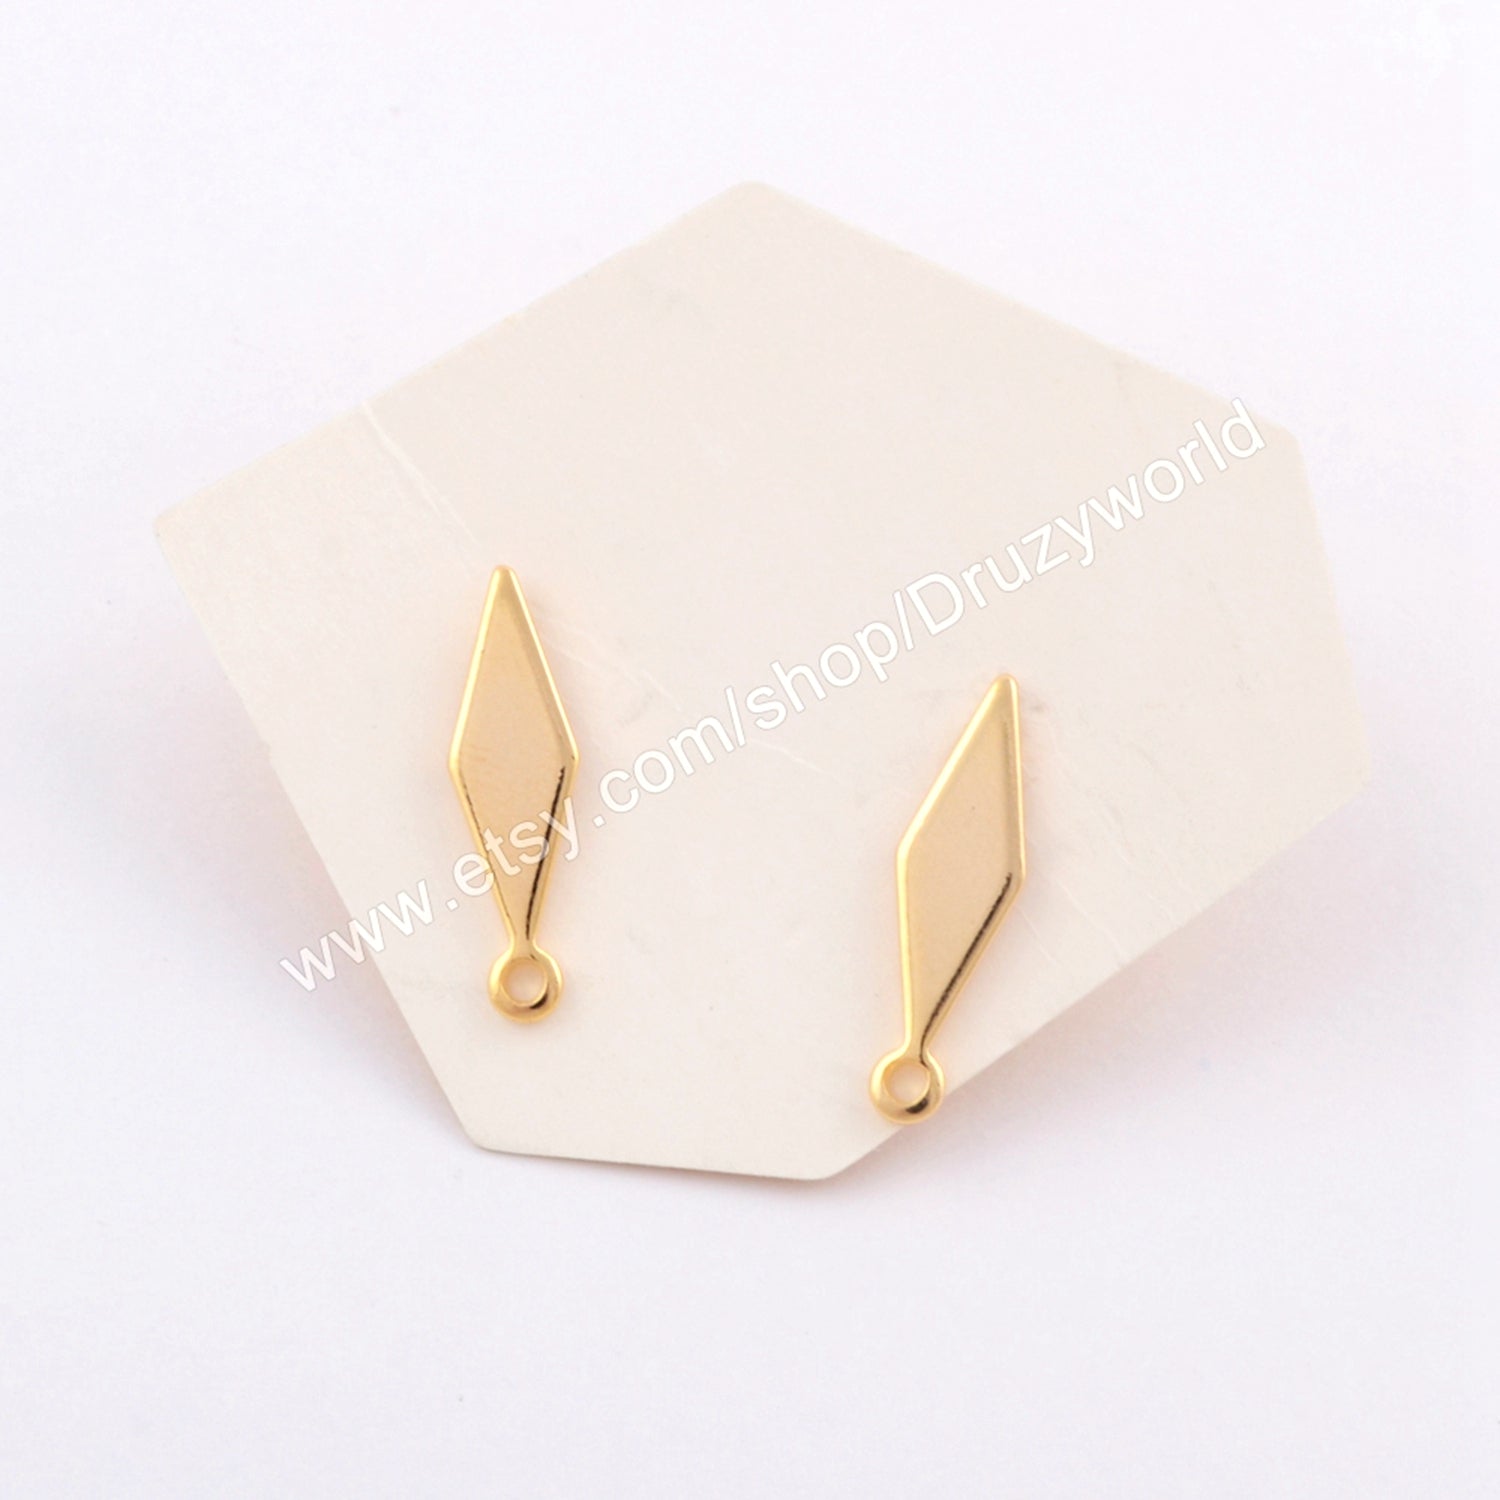 40 Pcs Fashion Gold Plated Brass Diamond Shape Slice DIY Stud Earrings Findings With Loop Dangle Earring Charm Making Jewelry PJ387